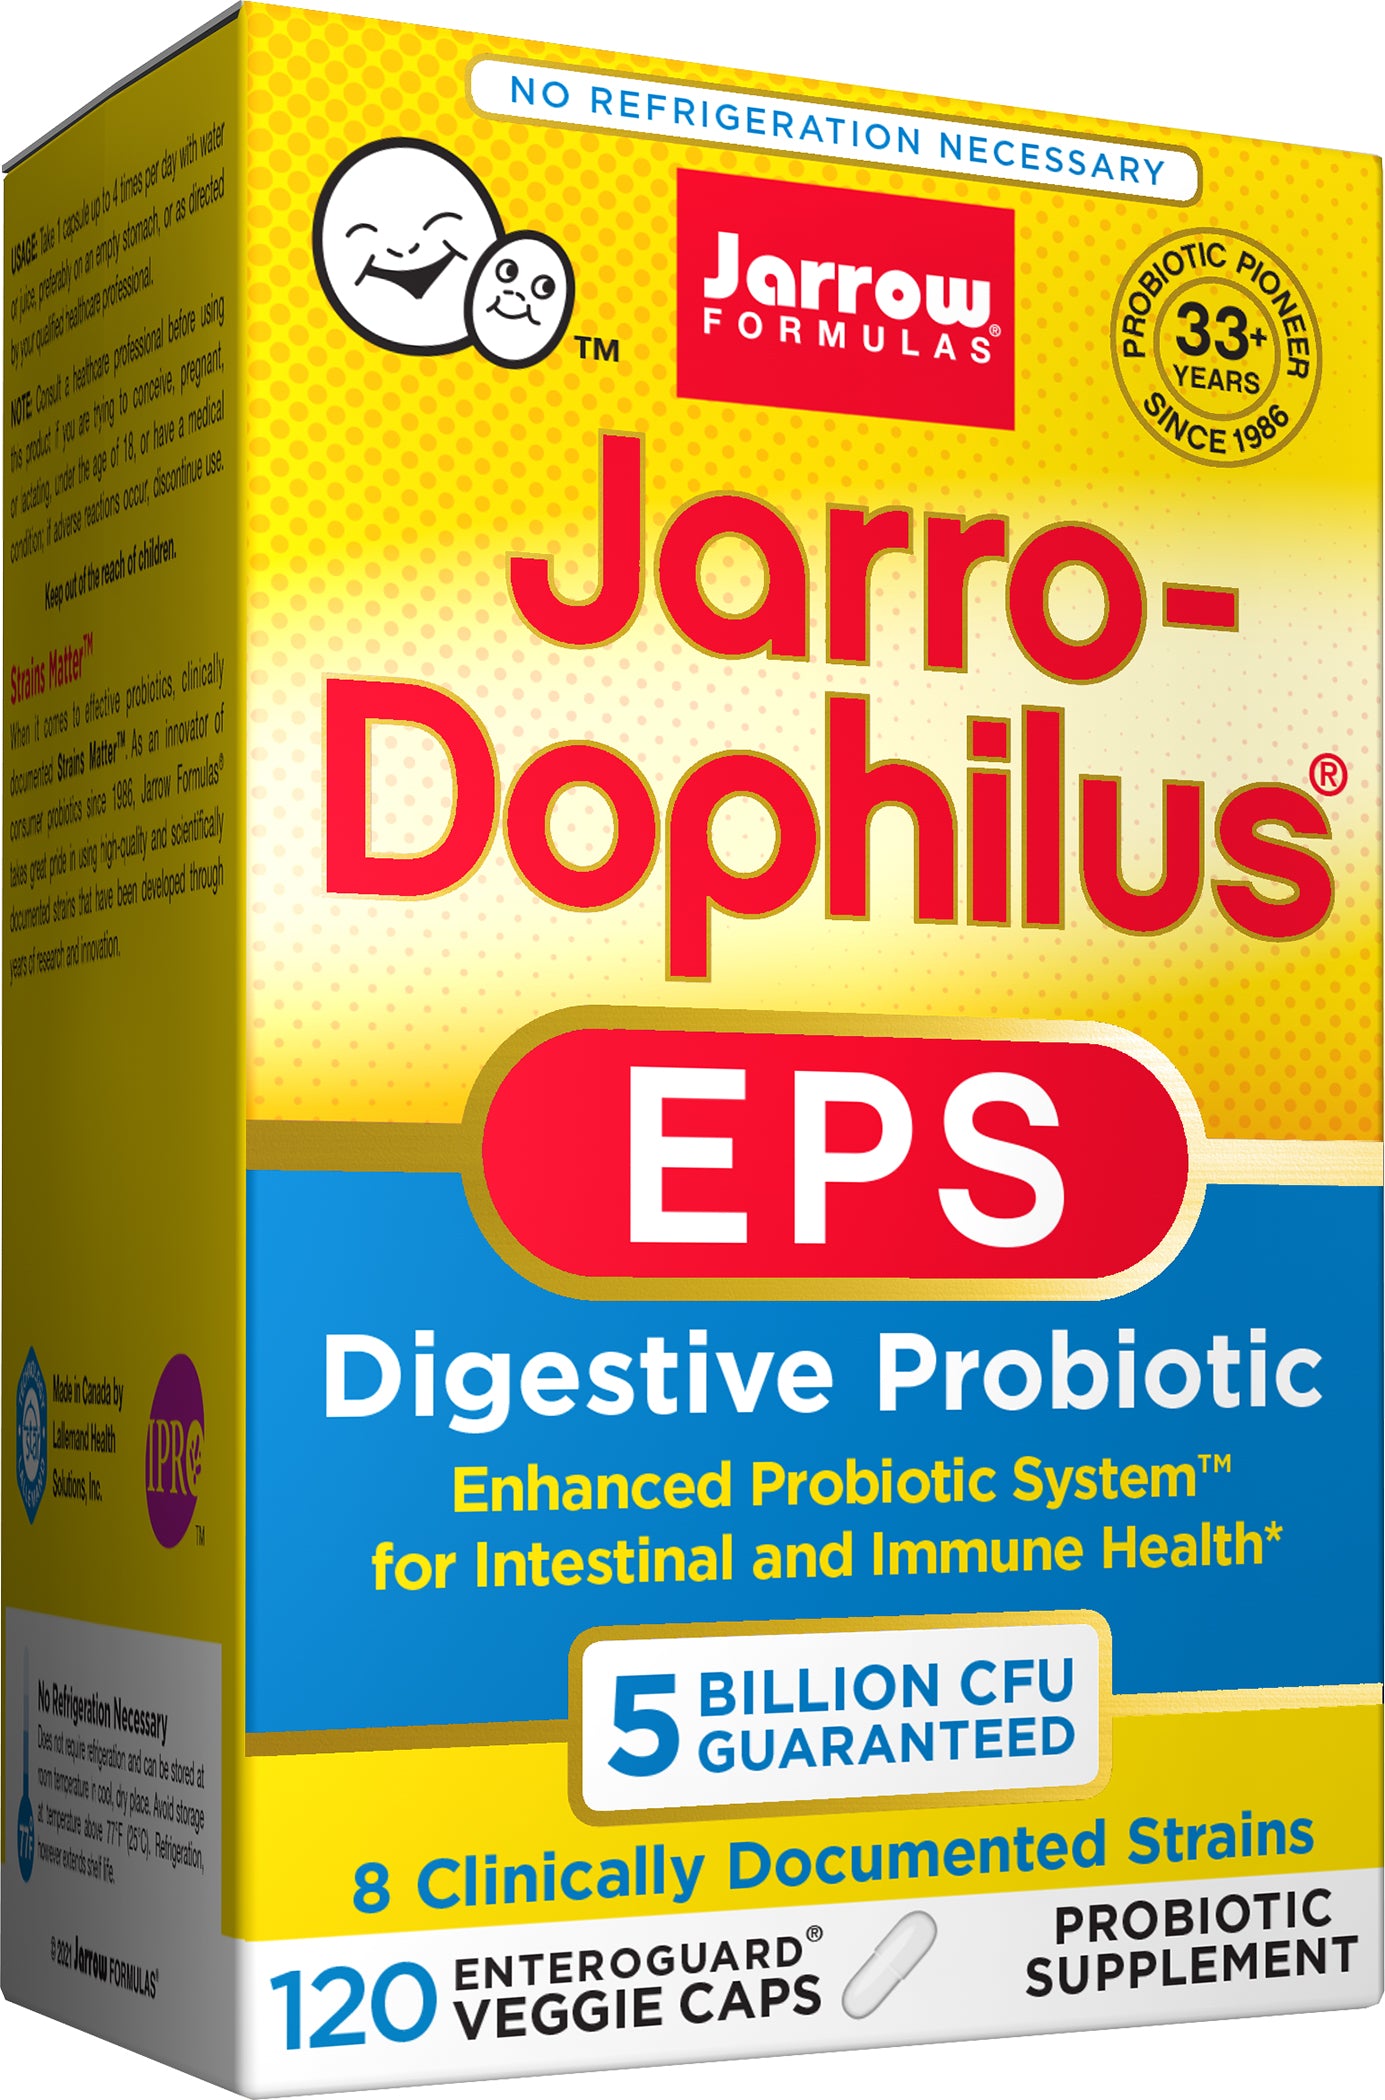 https://jarrowrussia.ru/catalog/jarrow-formulas-jarro-dophilus-eps-5b-60